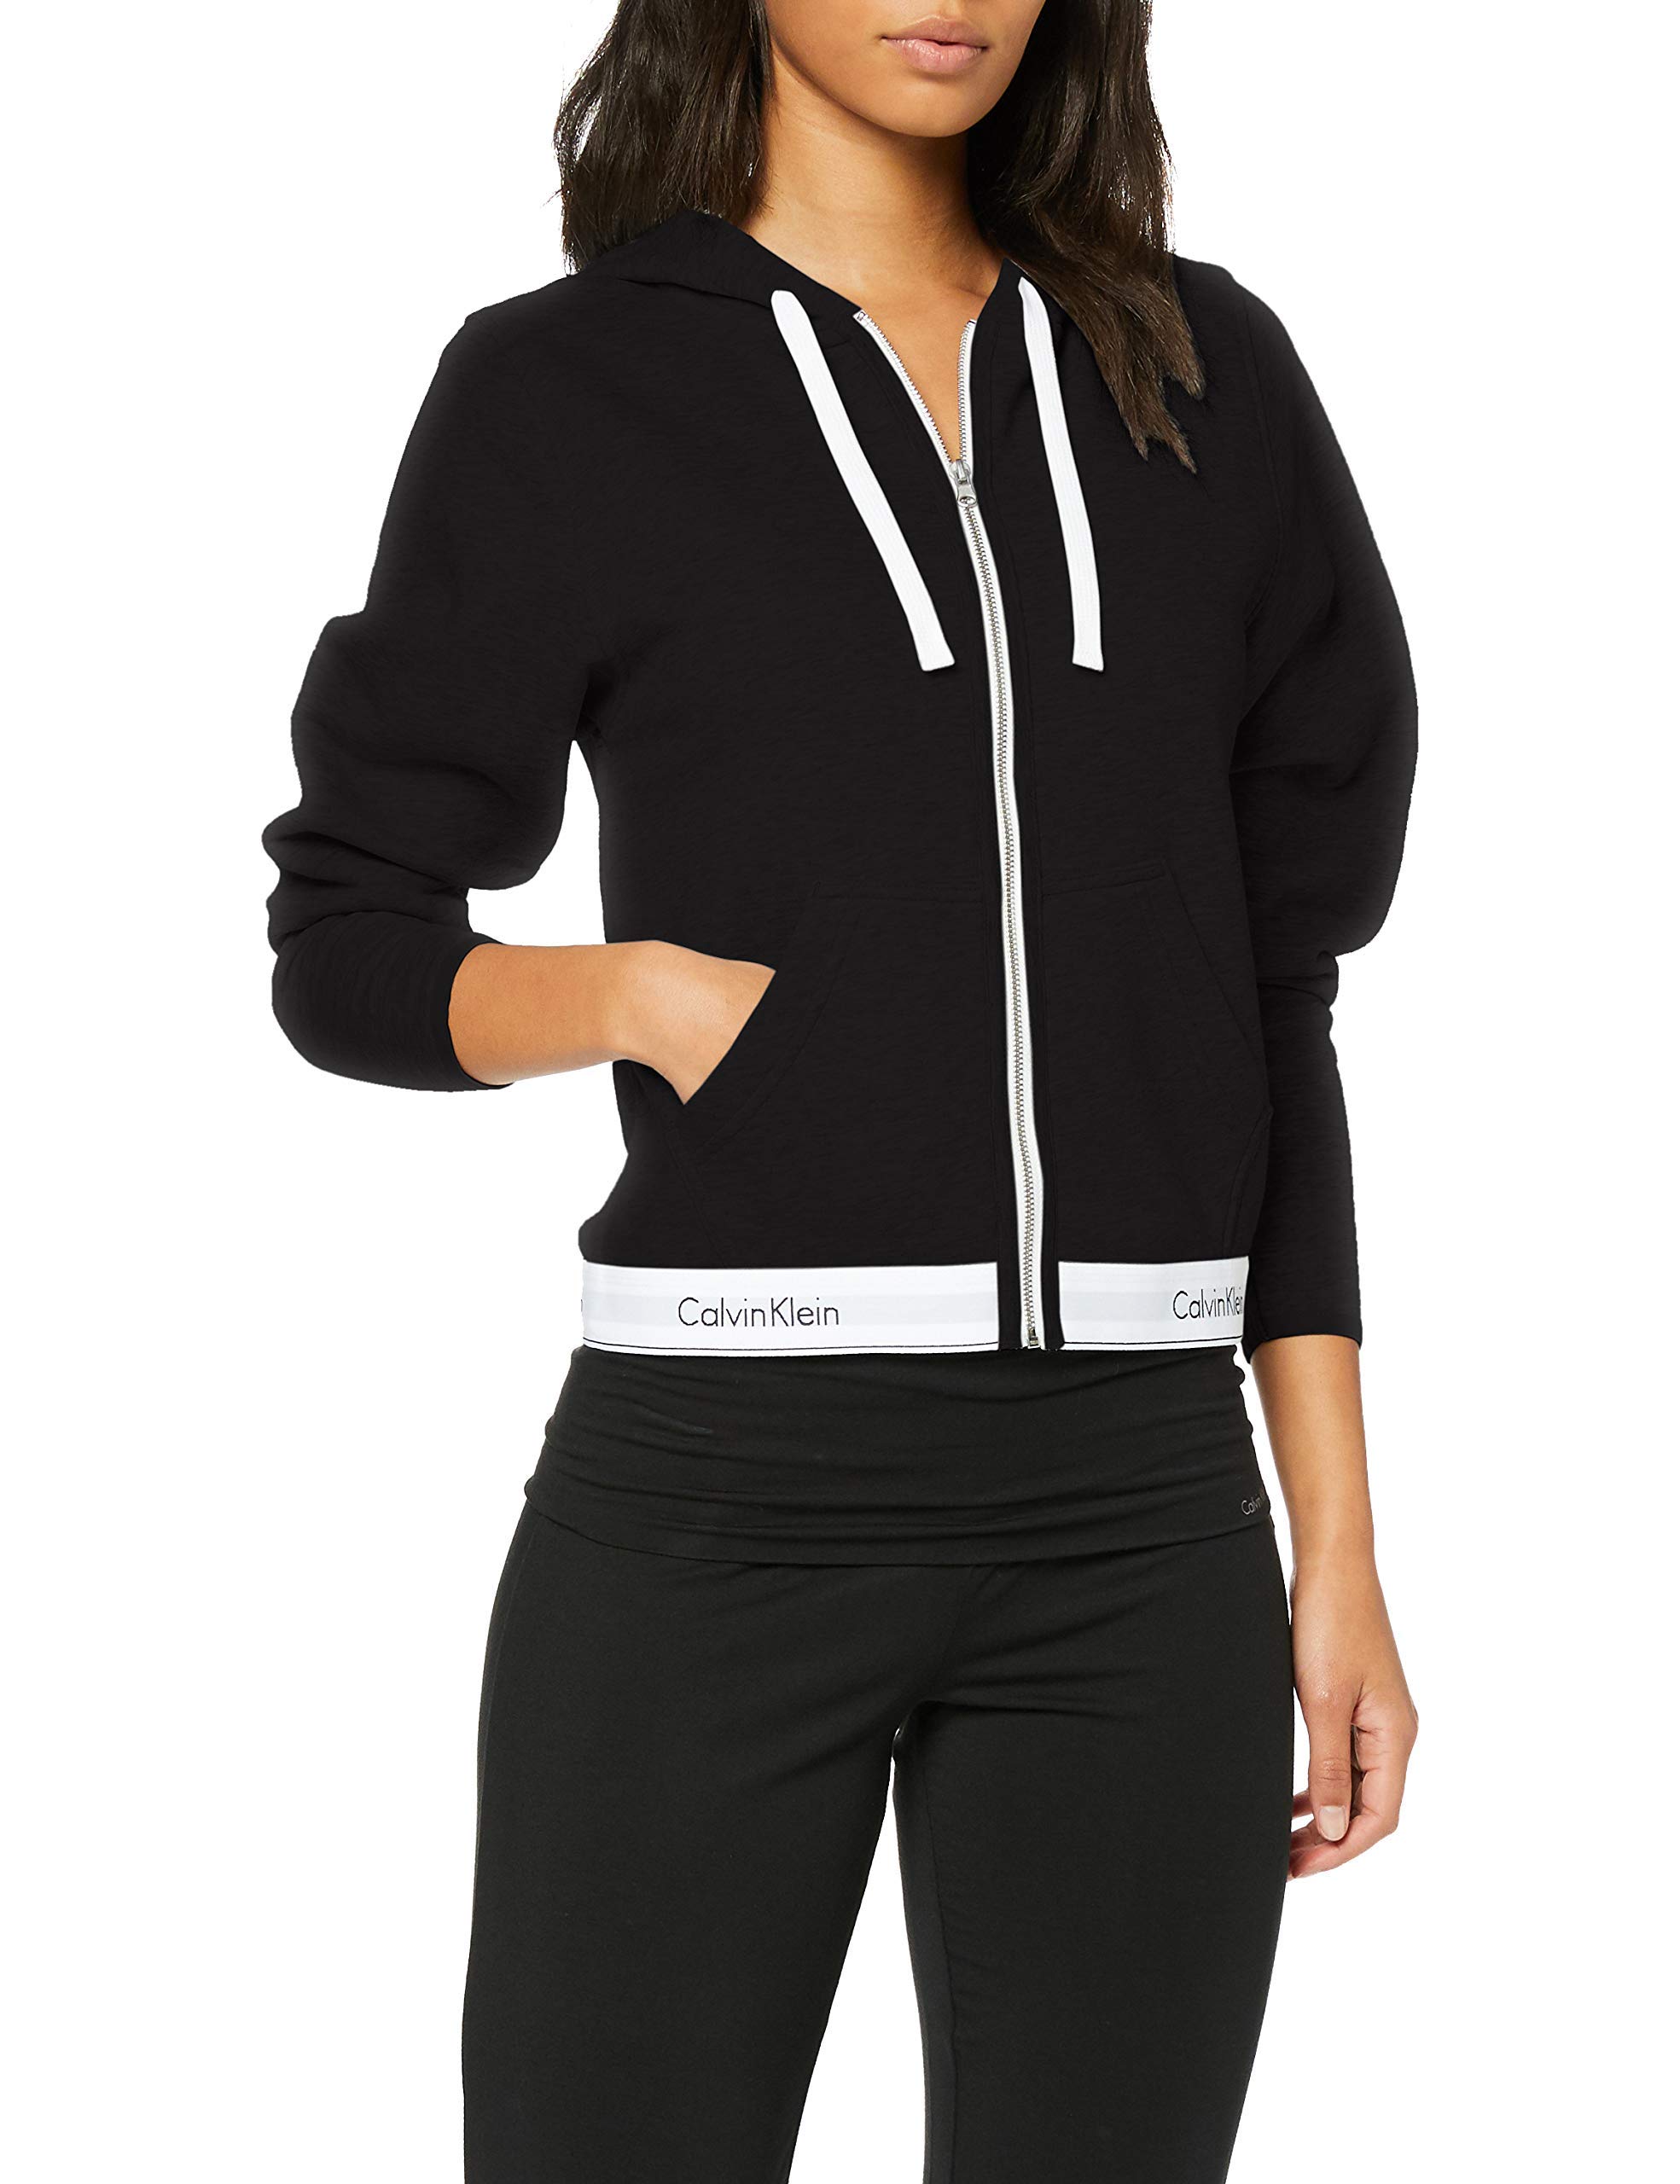 Calvin Klein Damen Top Hoodie Full Zip mit Kapuze, Reißverschluss, Black, XS